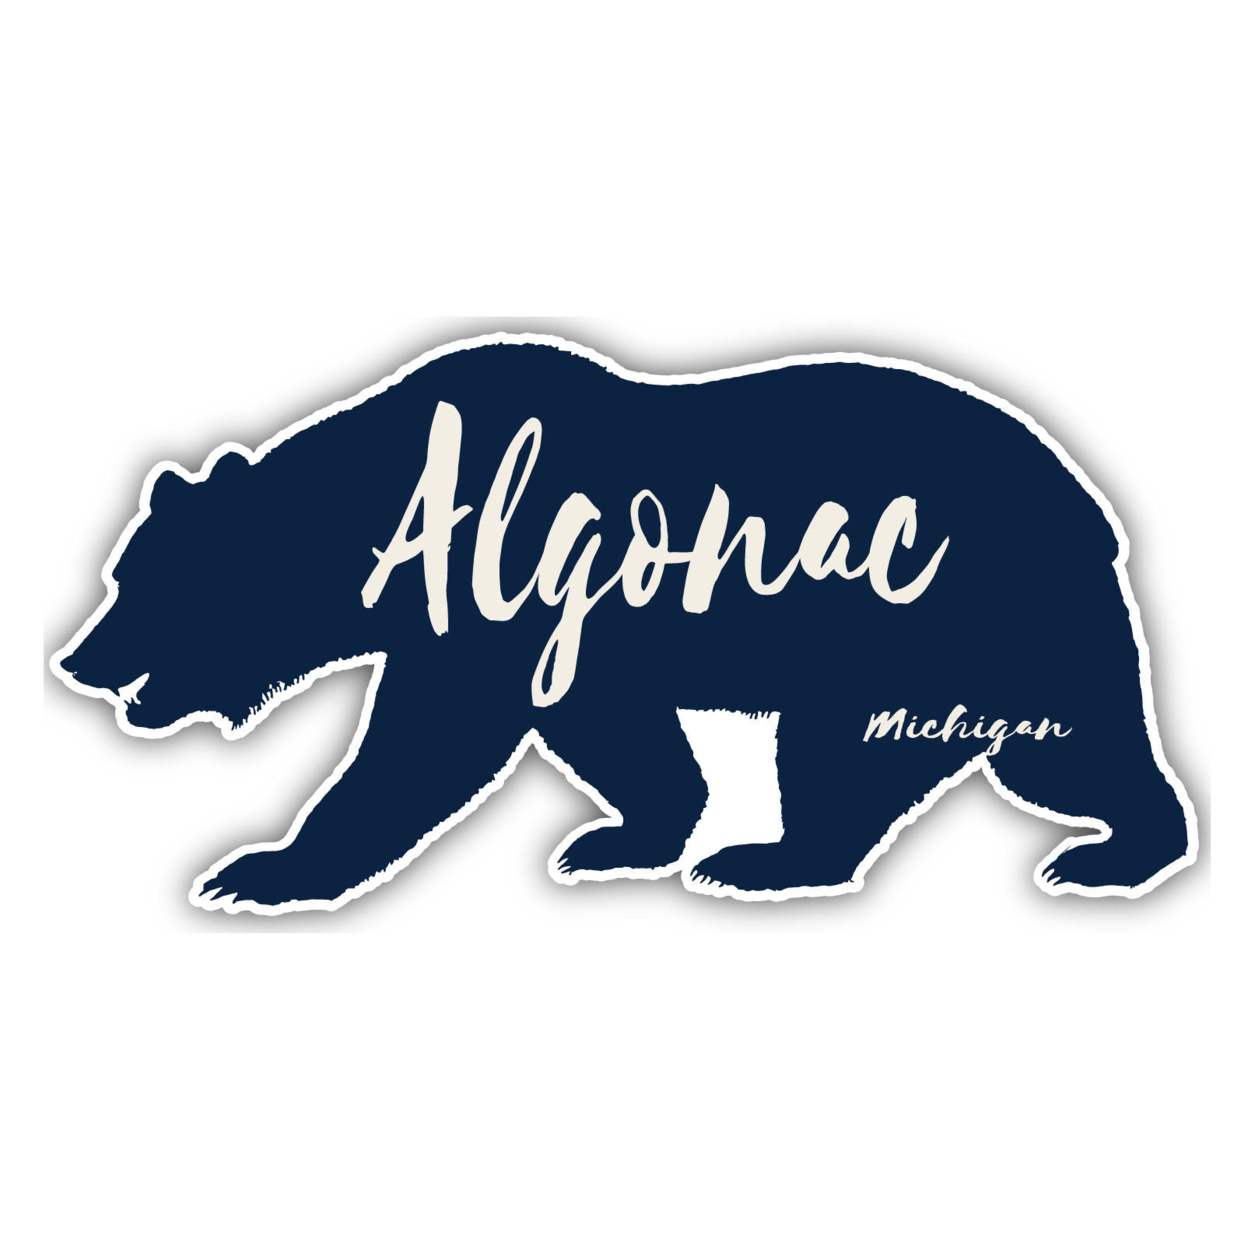 Algonac Michigan Souvenir Decorative Stickers (Choose Theme And Size) - 4-Pack, 10-Inch, Bear